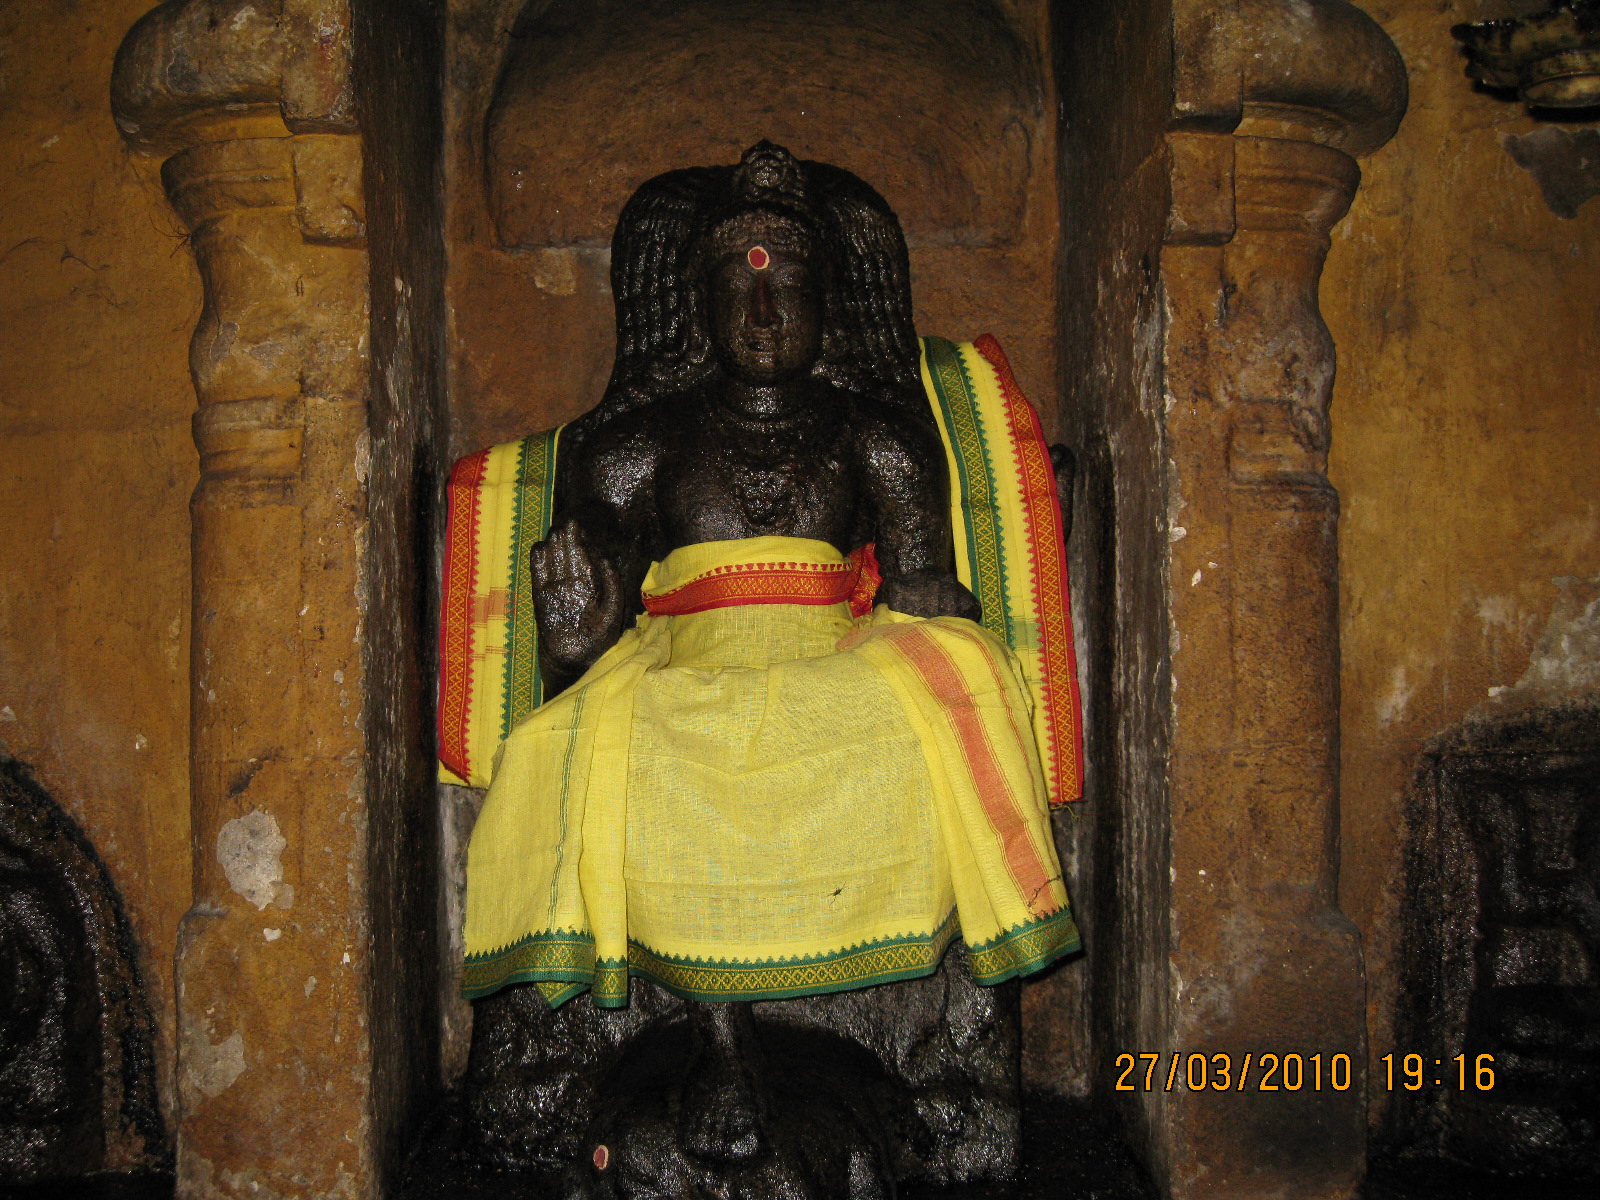 Sri Veeratteswarar Temple, Thiruppariyalur (Parasallur), Mayiladuthurai - 275 Shiva Temples